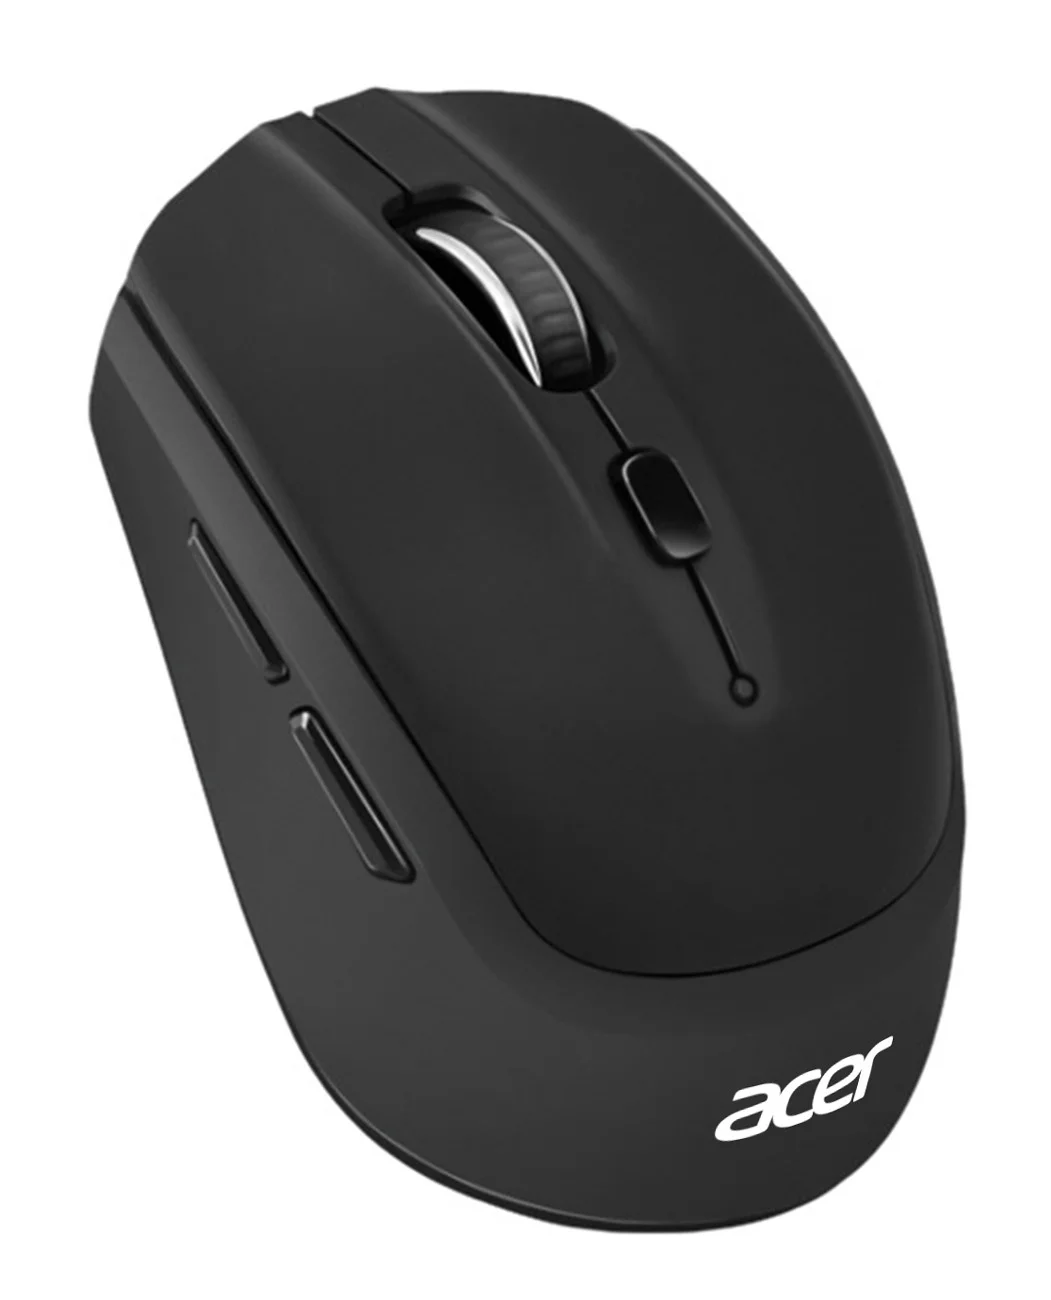 Mouse Acer omr040 black optical (1600dpi) Wireless USB (7but) | Компьютеры и офис